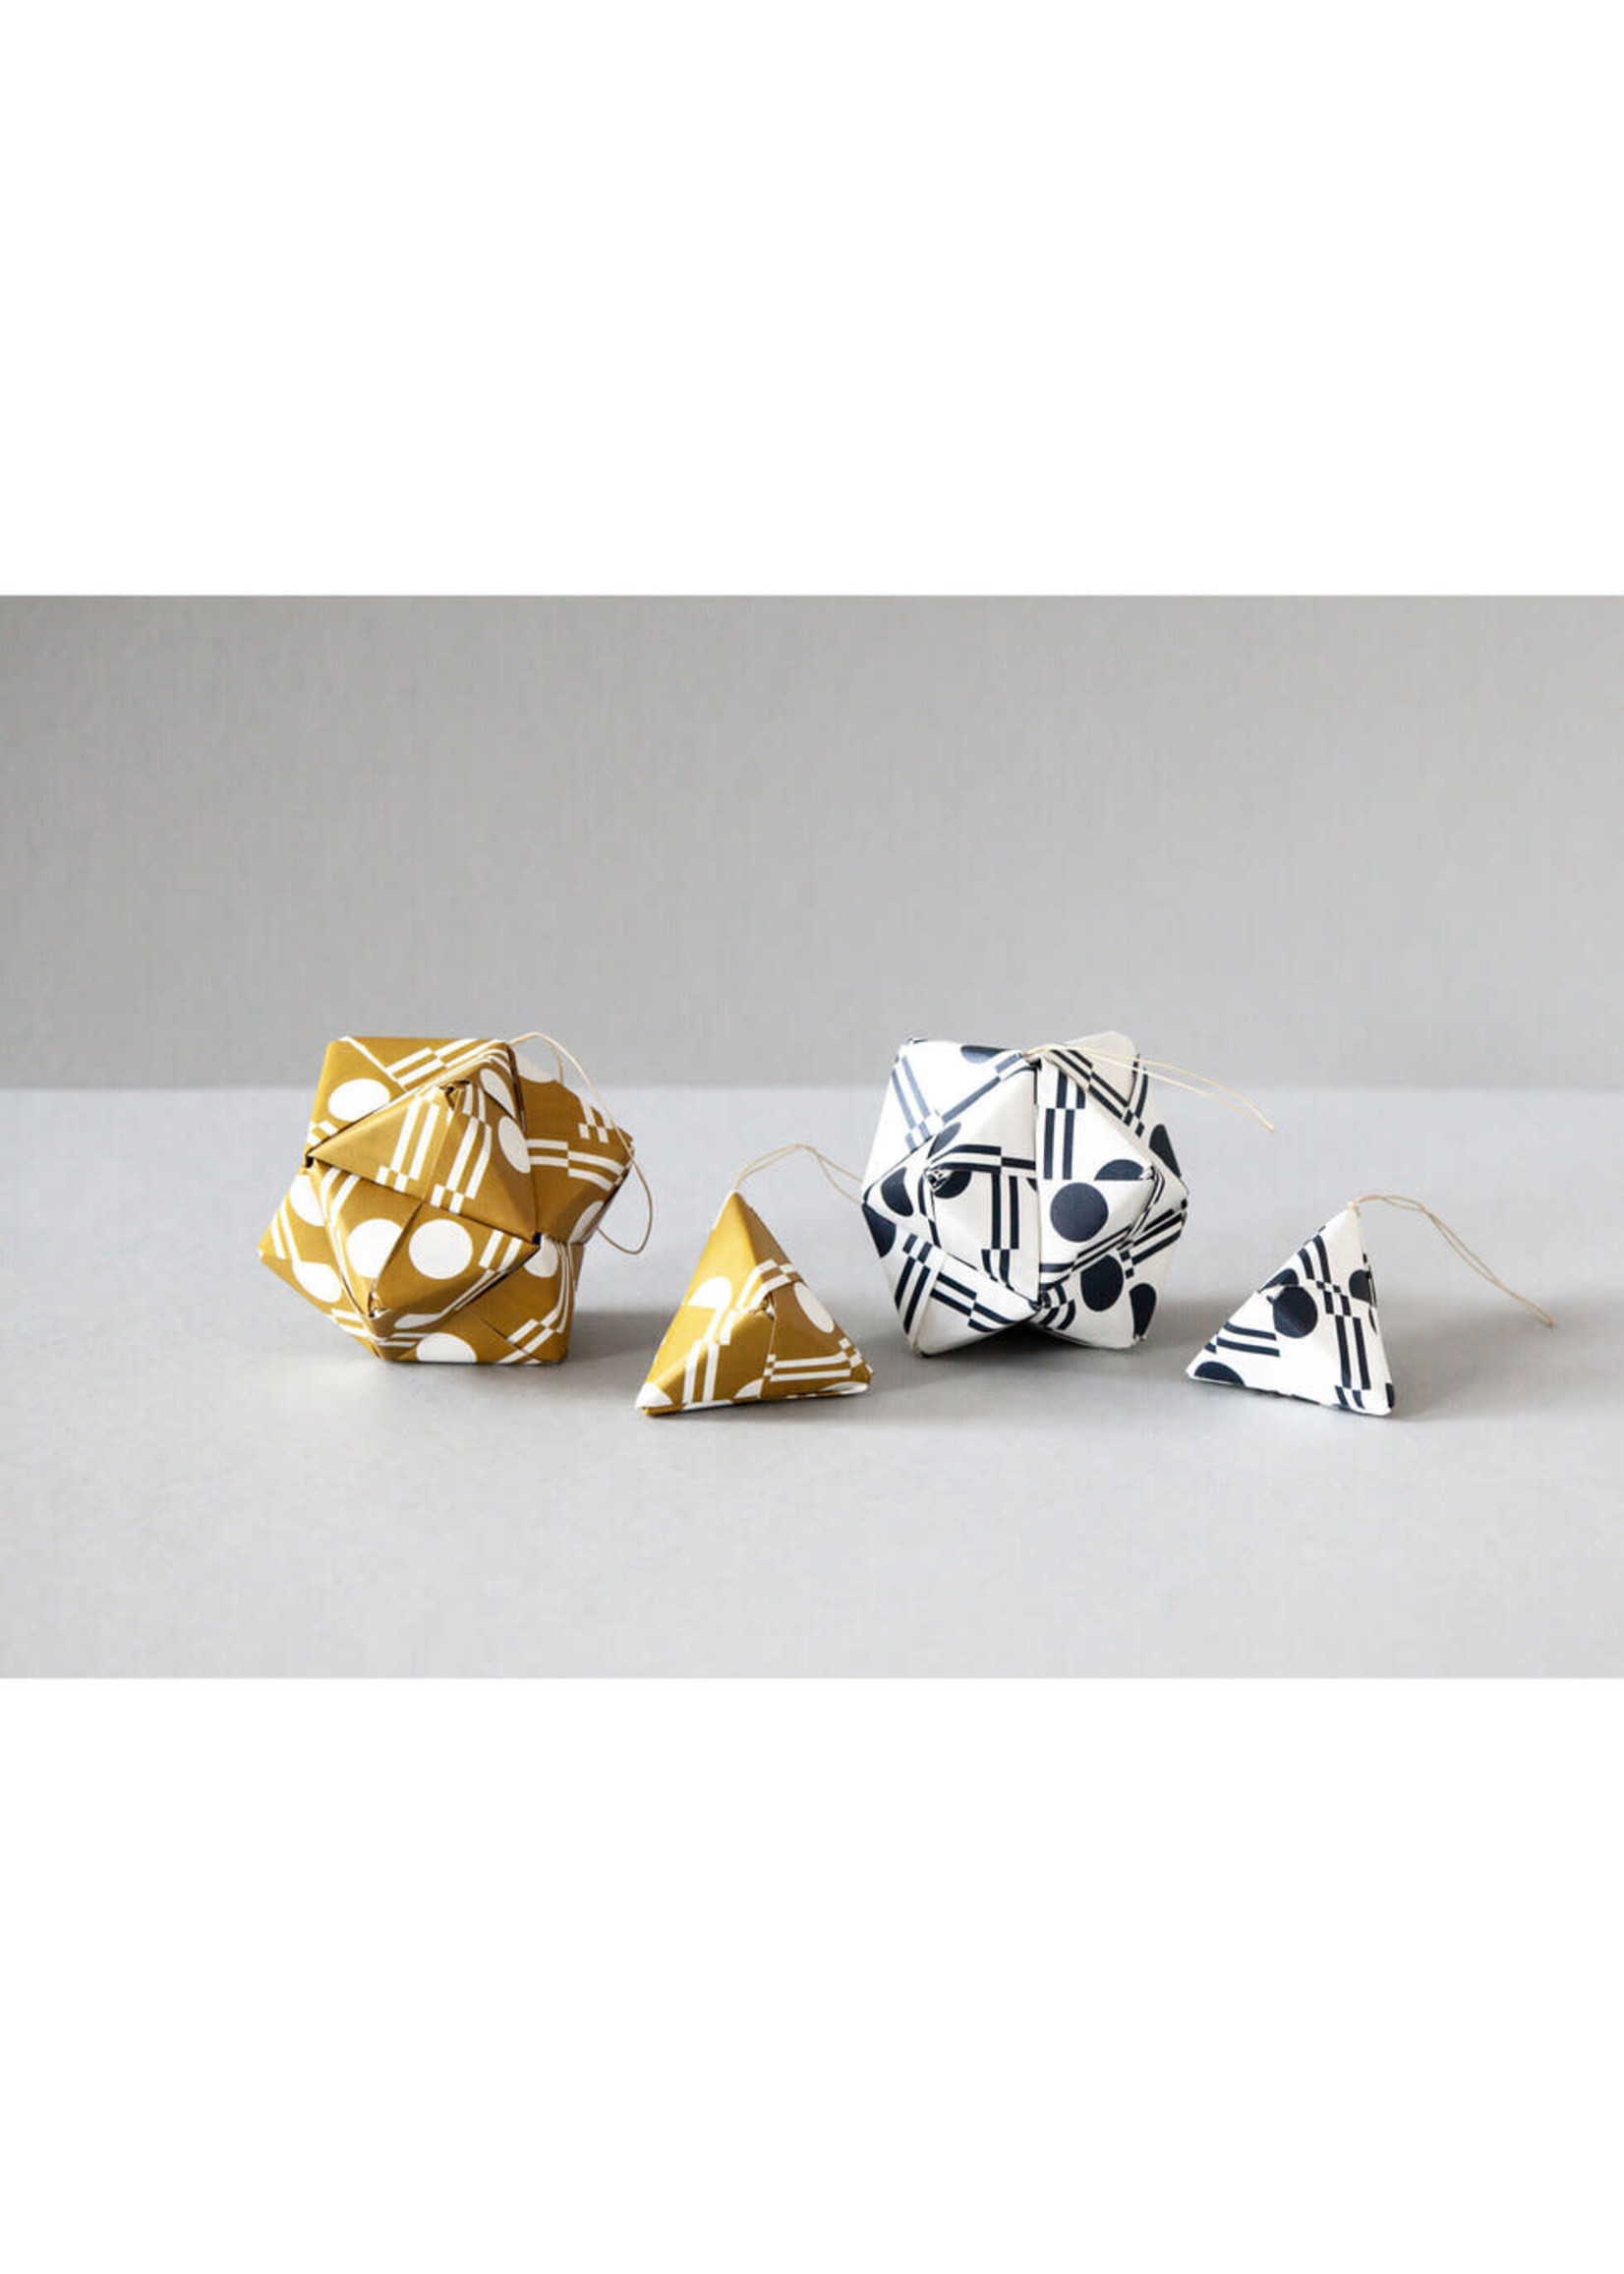 Ola Origami Decoration Kit - Benita Print